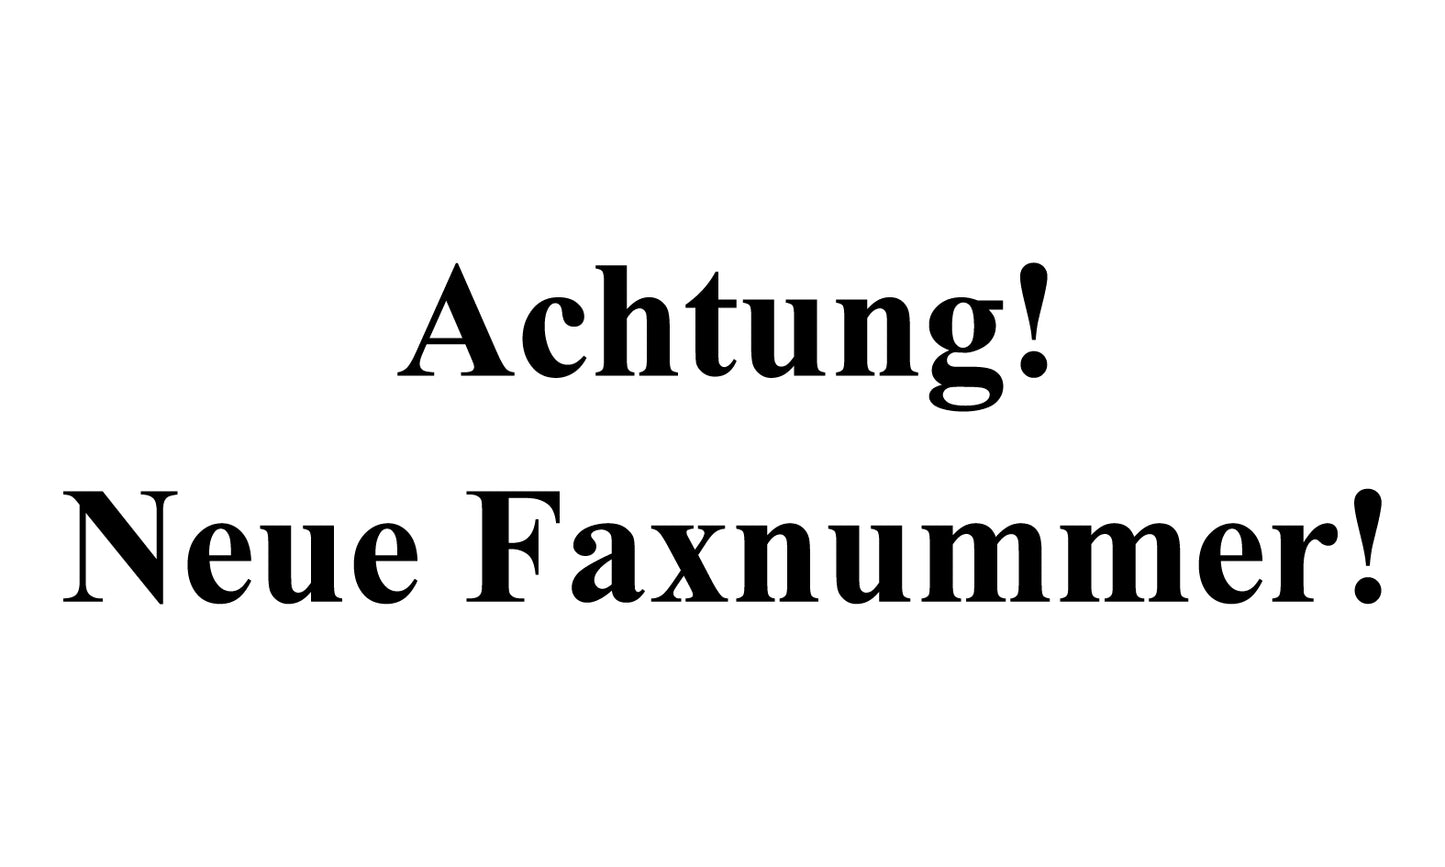 Büroorganisation "Achtung! Neue Faxnummer!" aus Papier